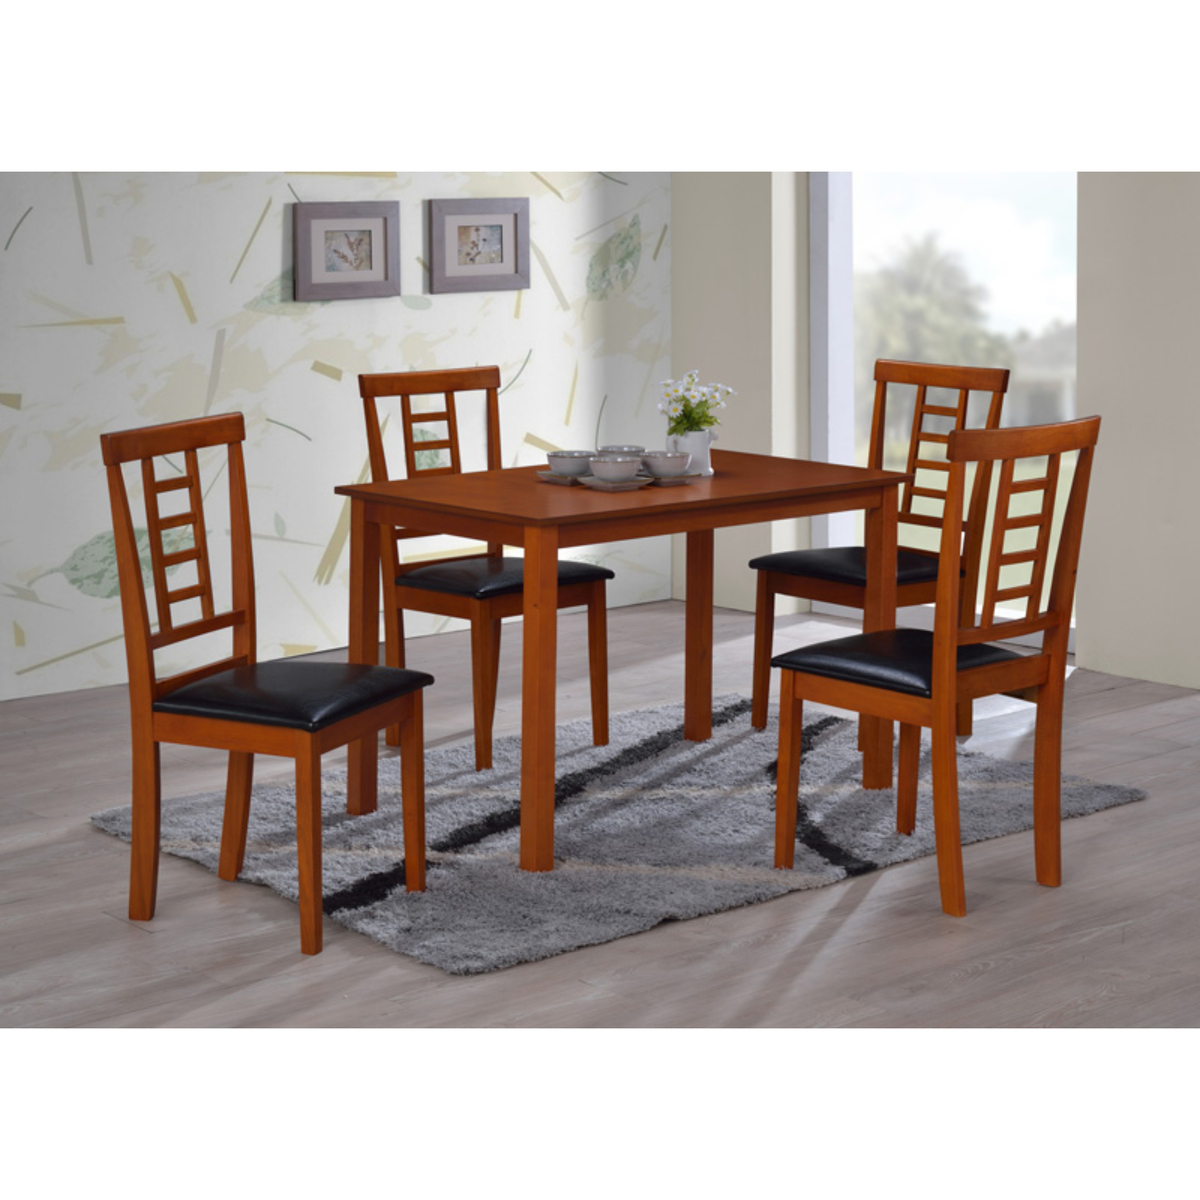 Maple Leaf Dining Table + 4 Chair Weneer 3188